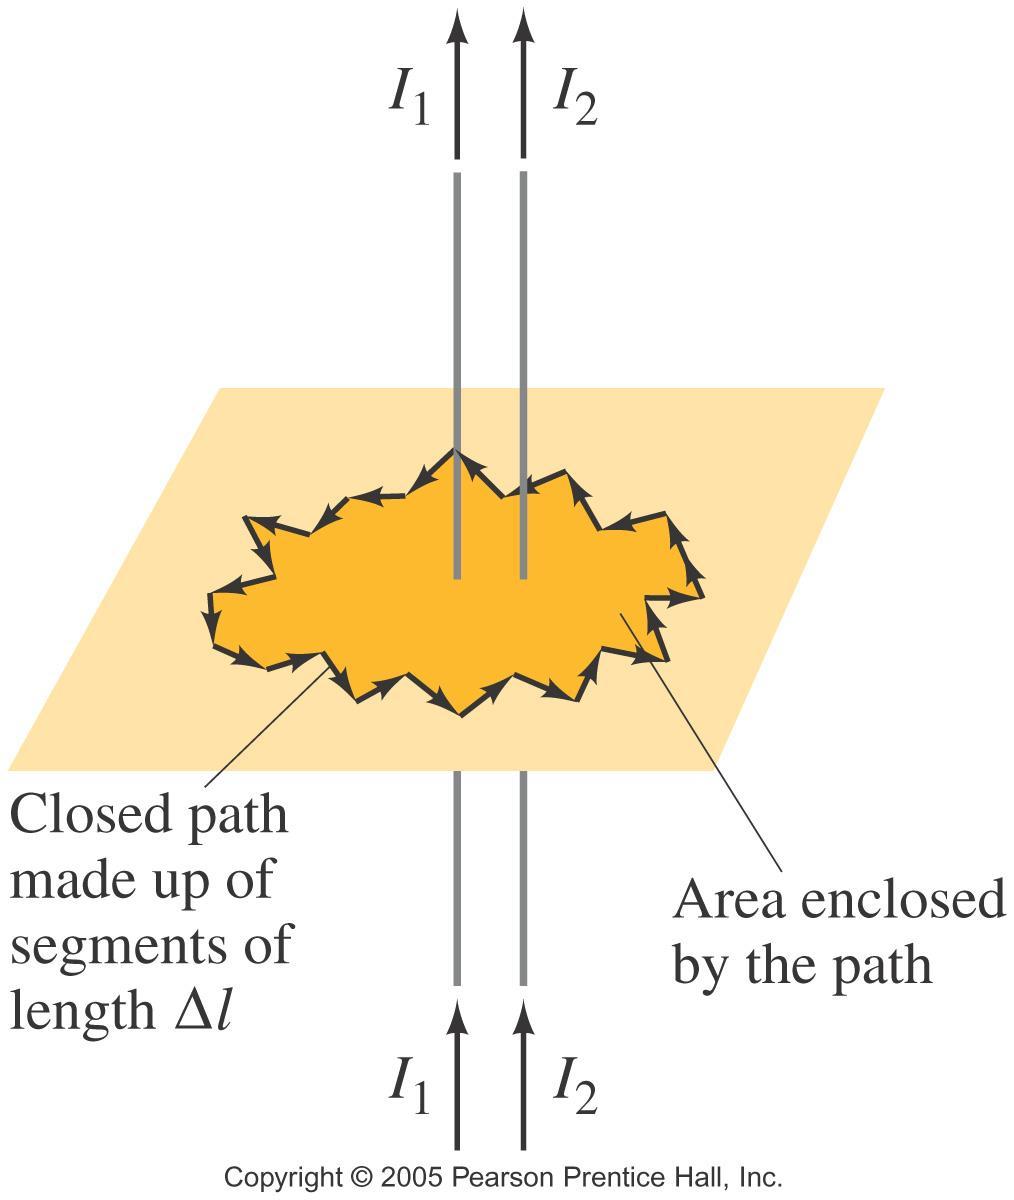 20.8 Ampère s Law Ampère s law relates the magnetic field around